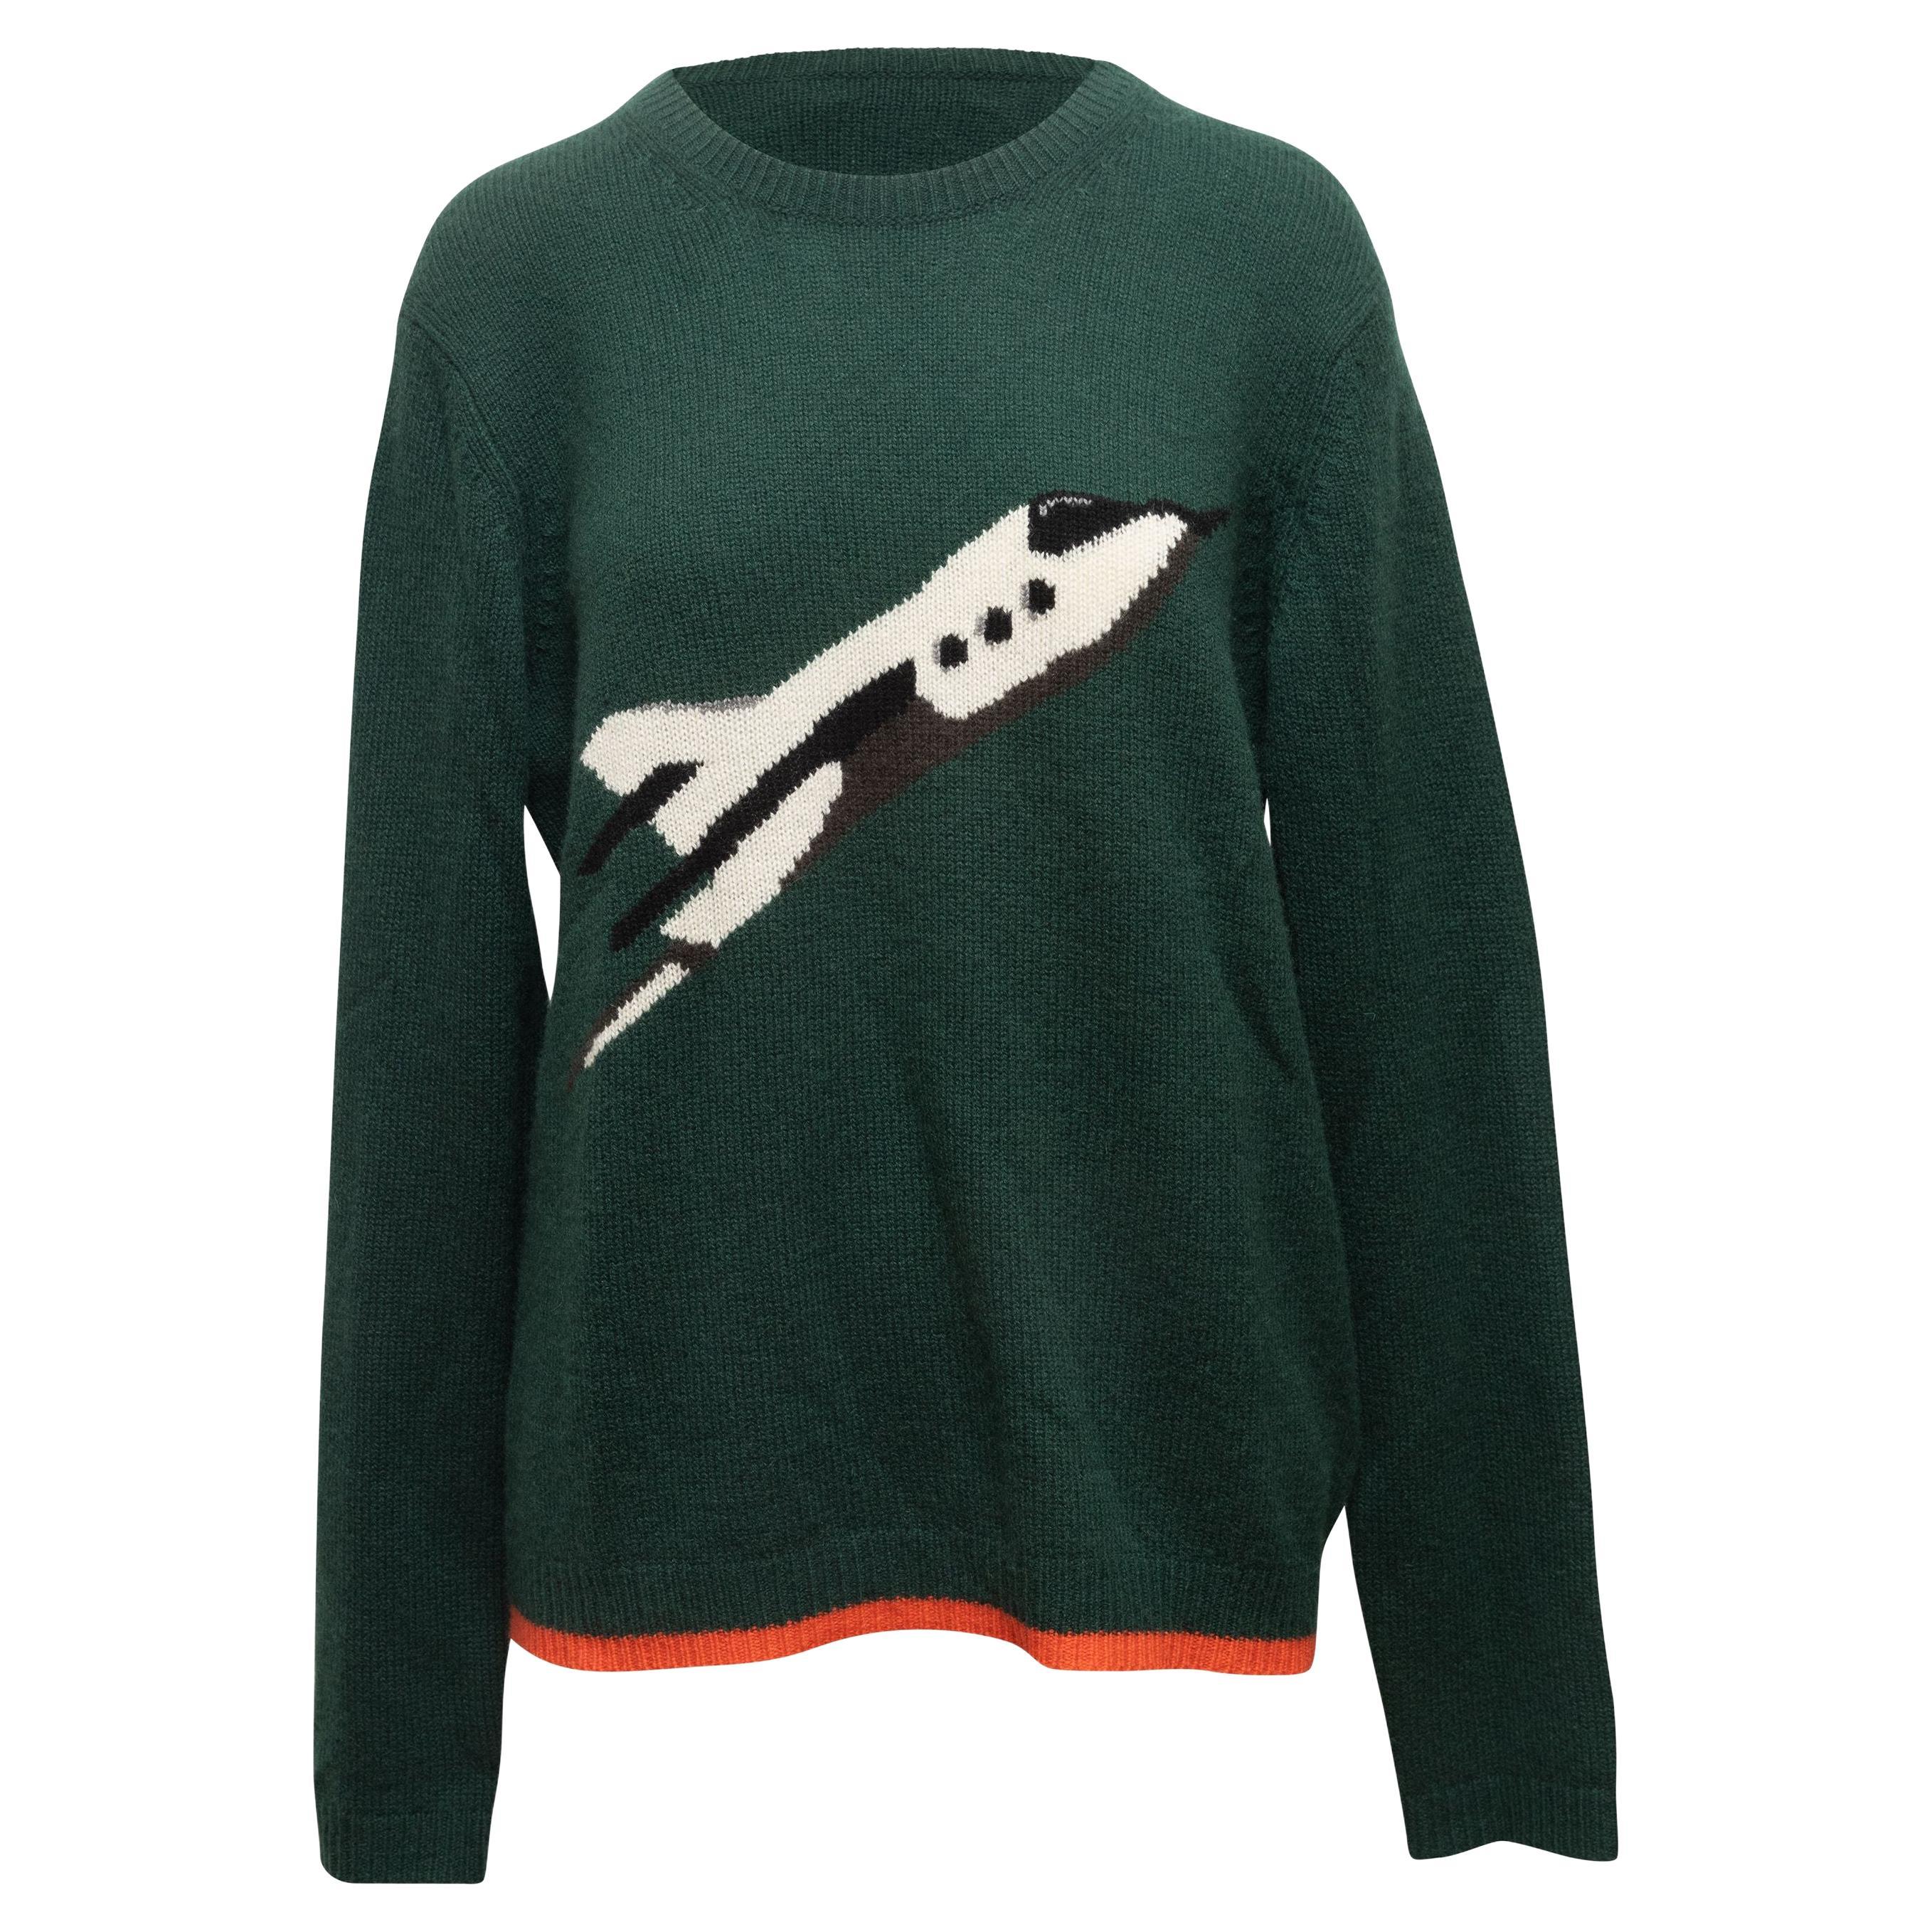 Coach Dark Green & Multicolor 1941 Cashmere Space Shuttle Sweater